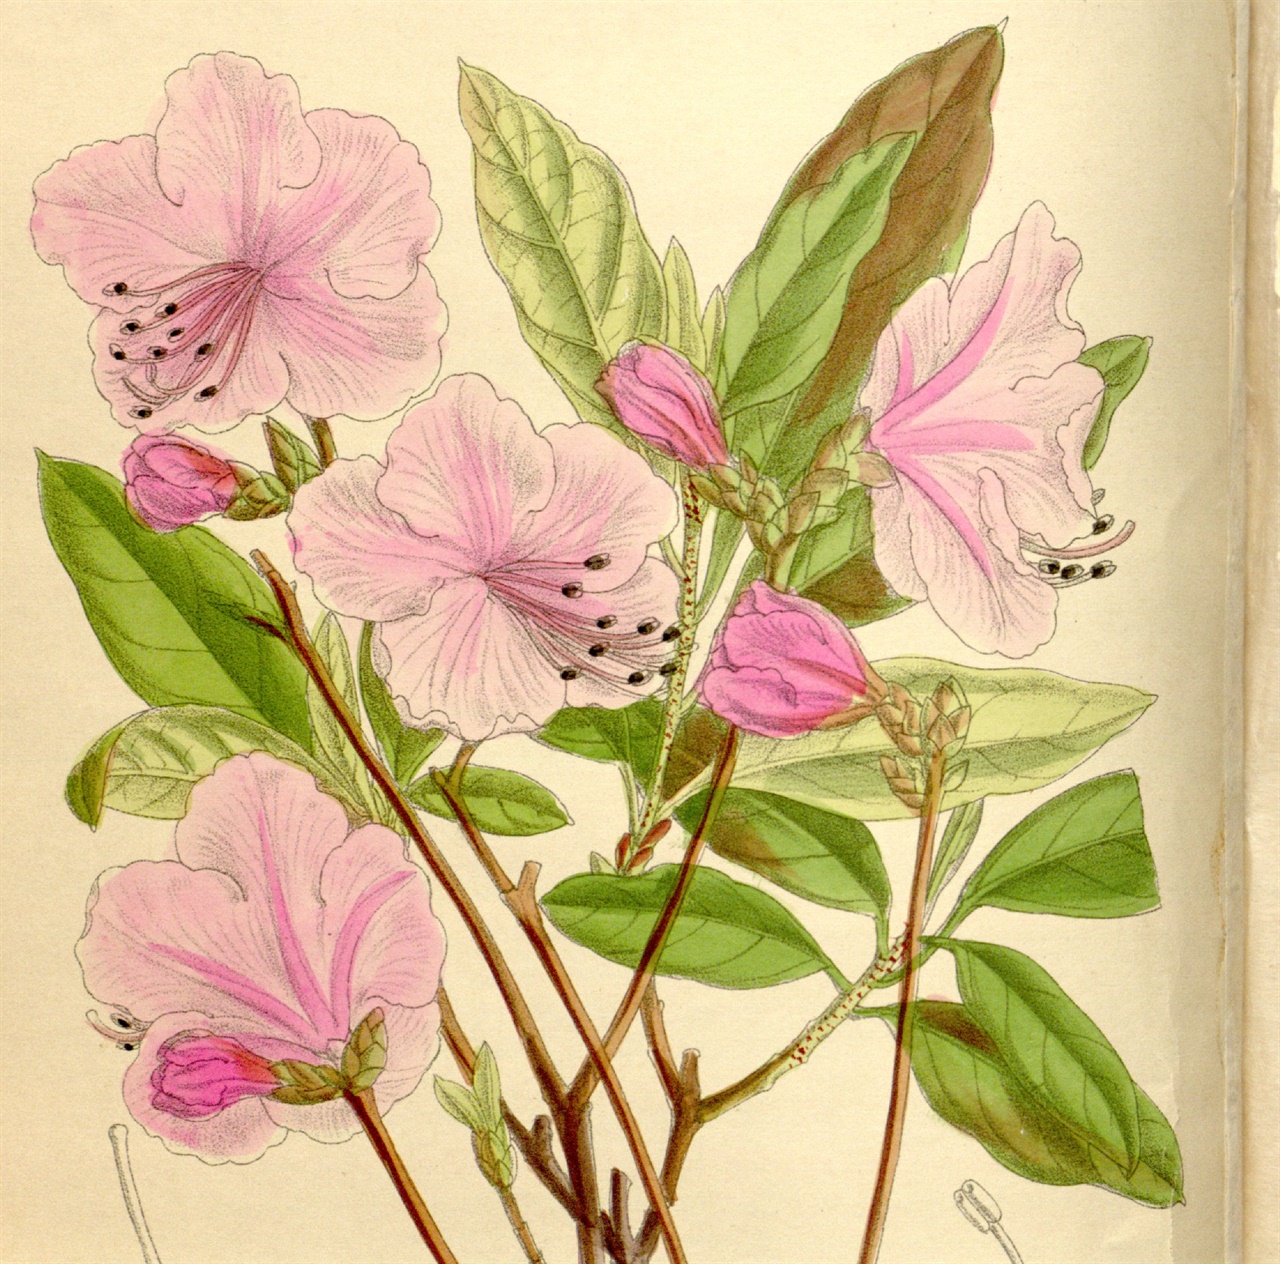 Curtis's Botanical Magazine, London., M.S. del., J.N.Fitch lith., 1910년